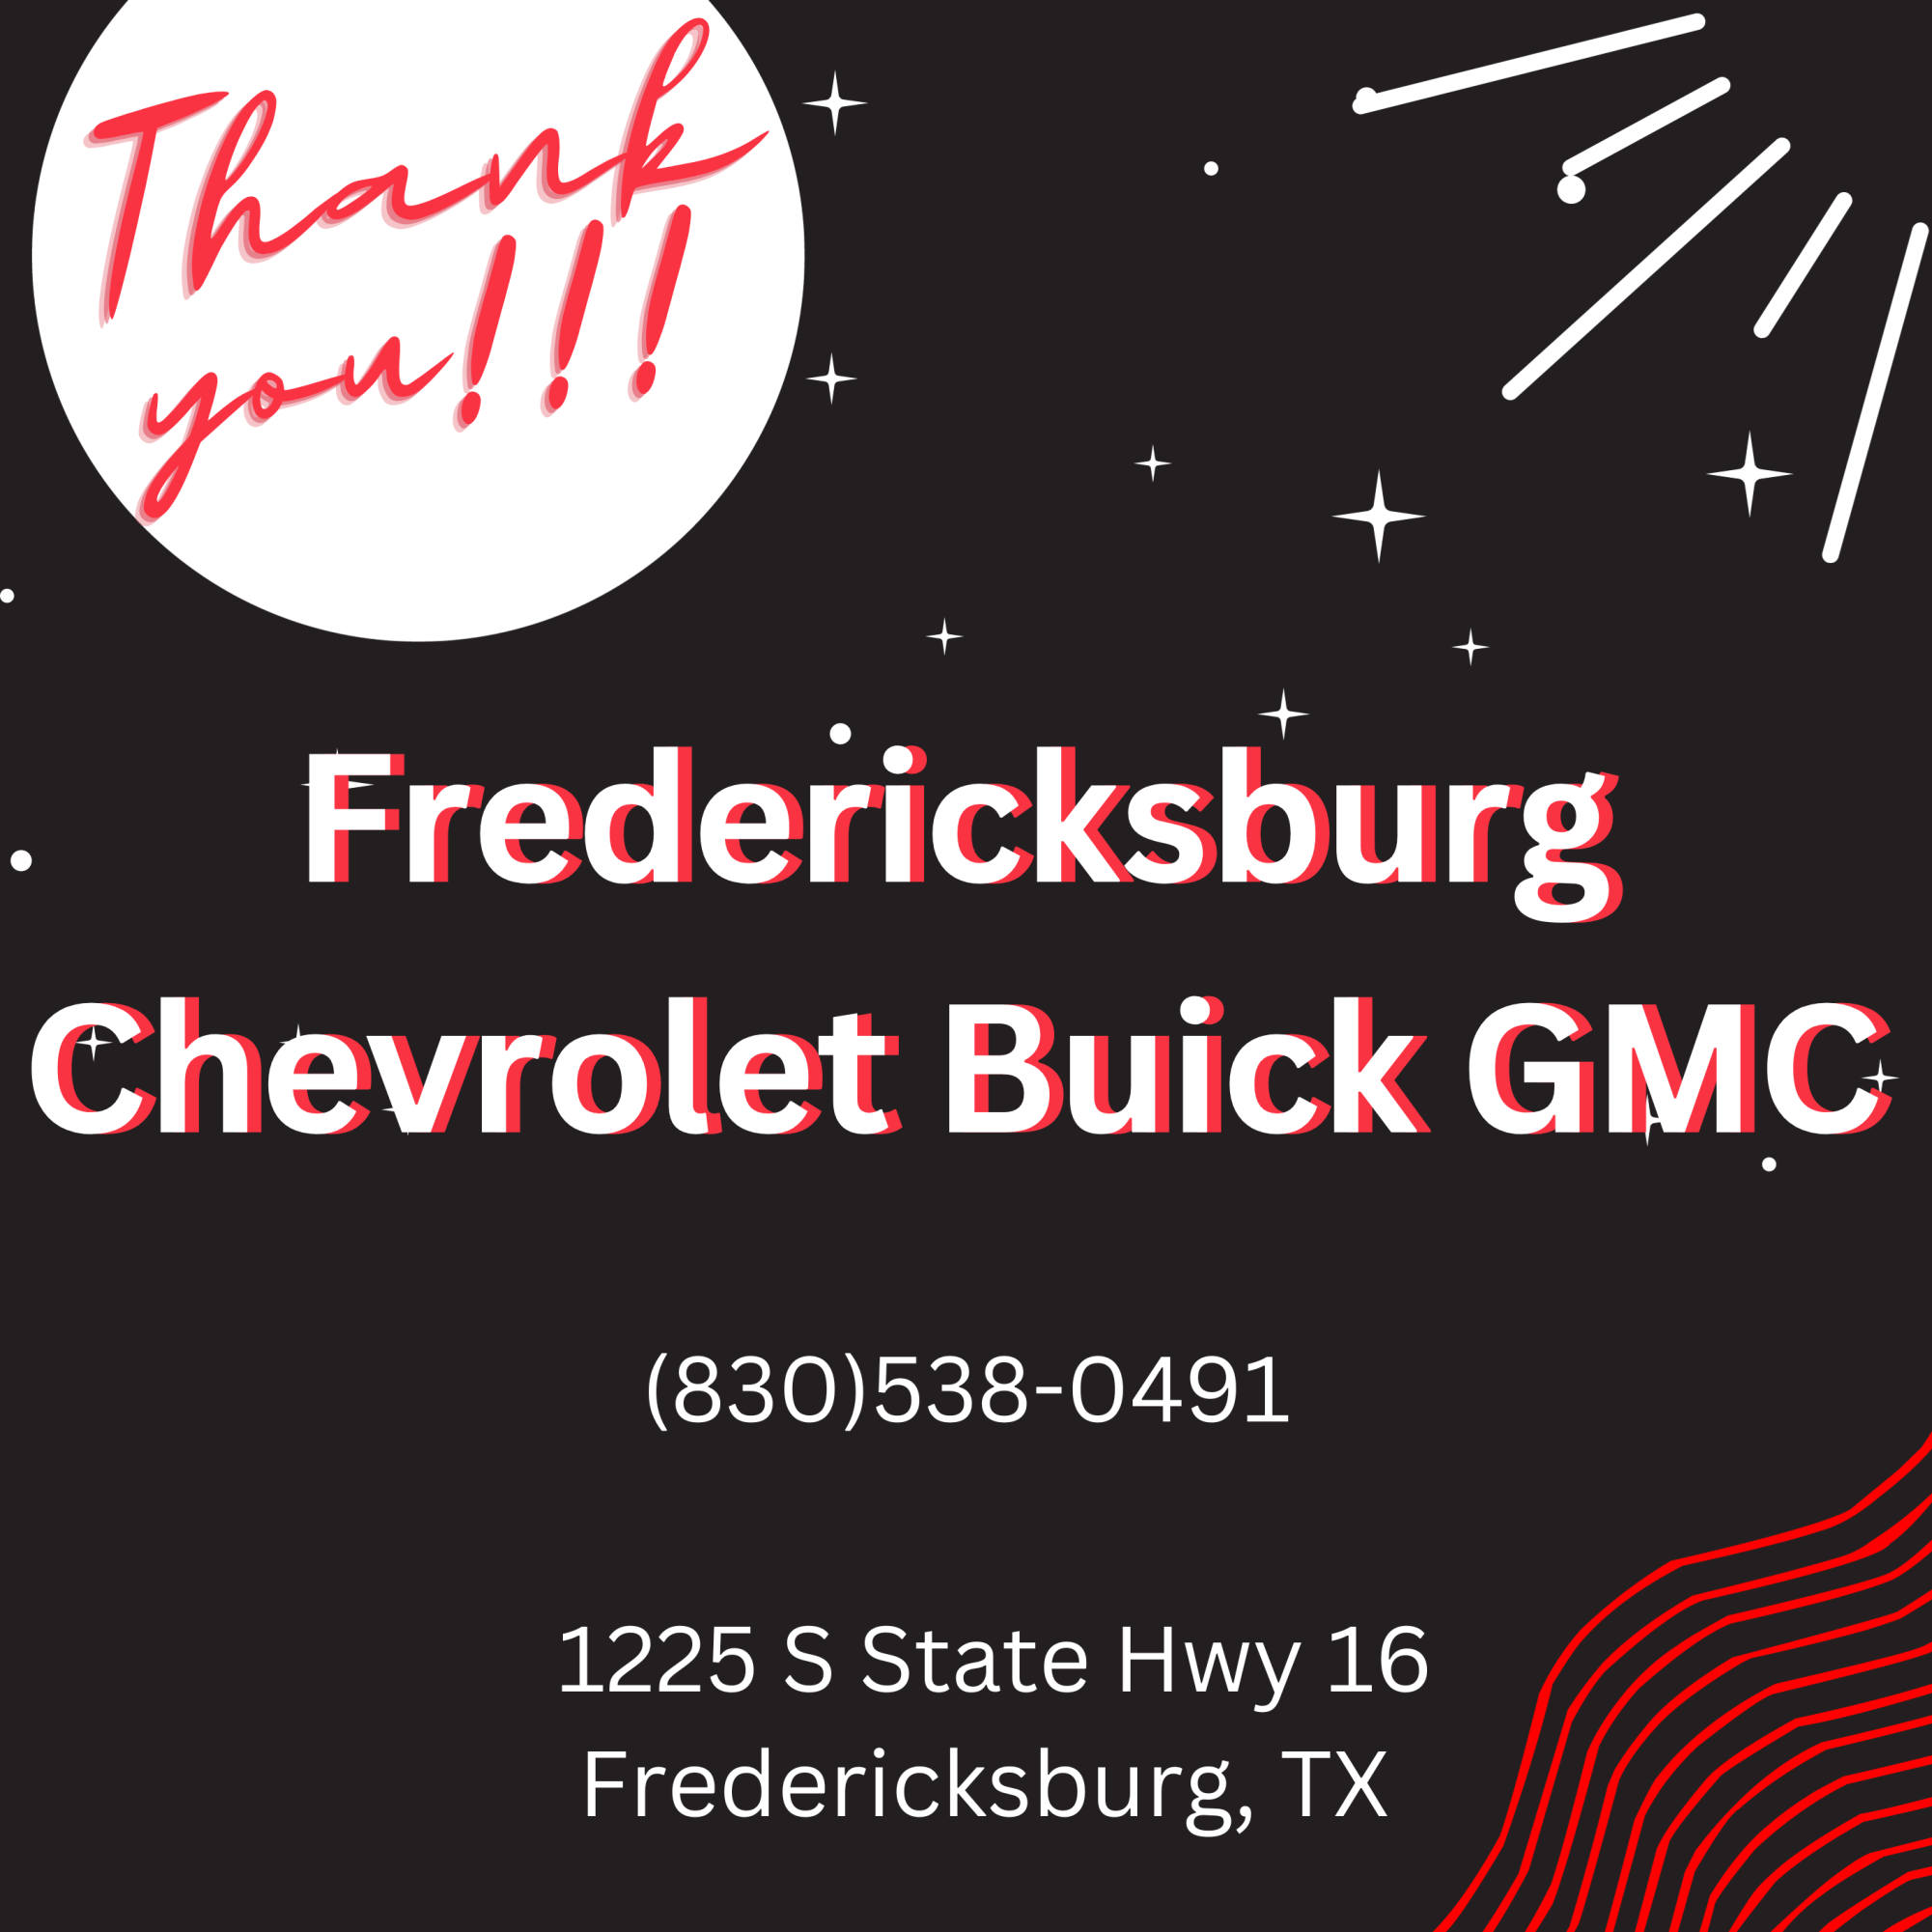 Fredericksburg Chevrolet Buick GMC